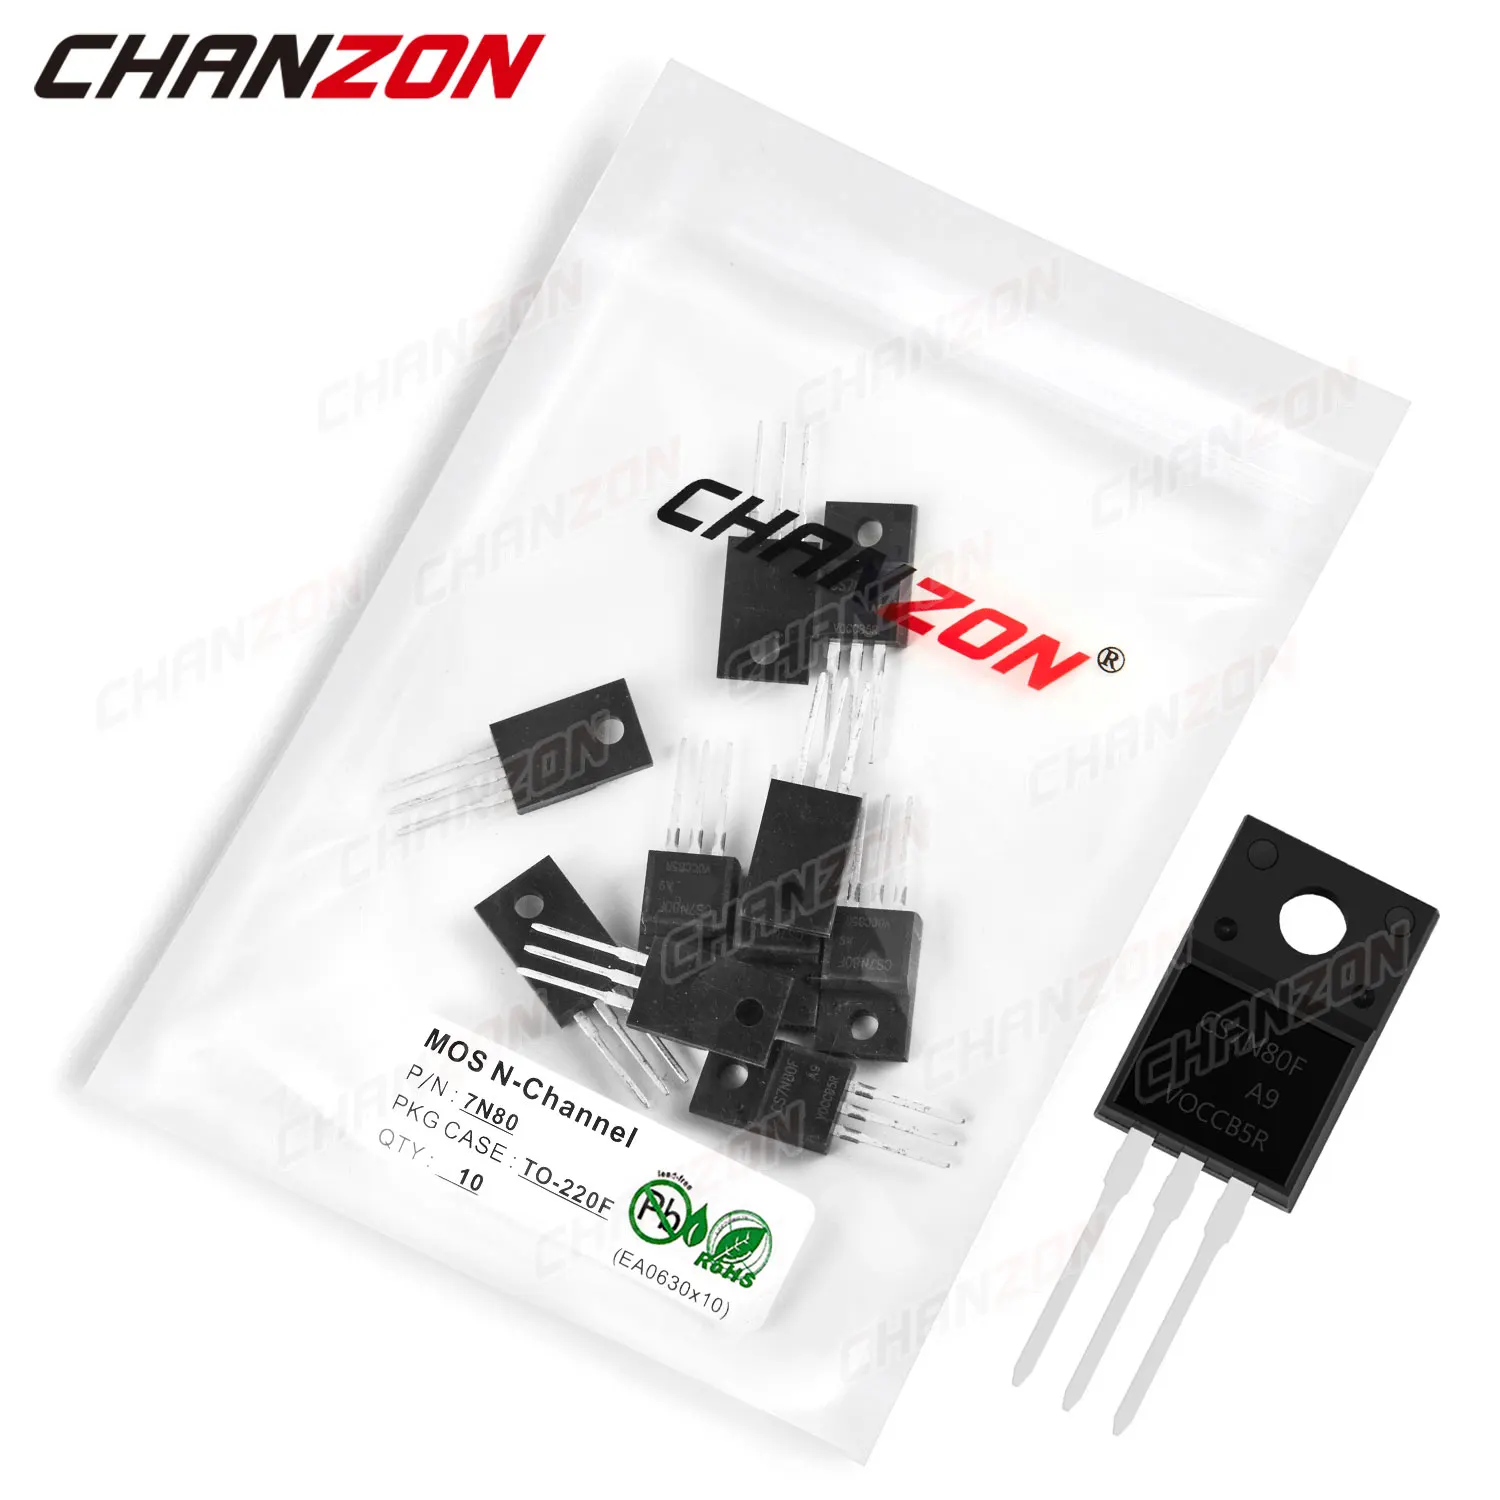 Chanzon 10pcs STF3NK80Z TO-220F Sic Mosfet Transistor